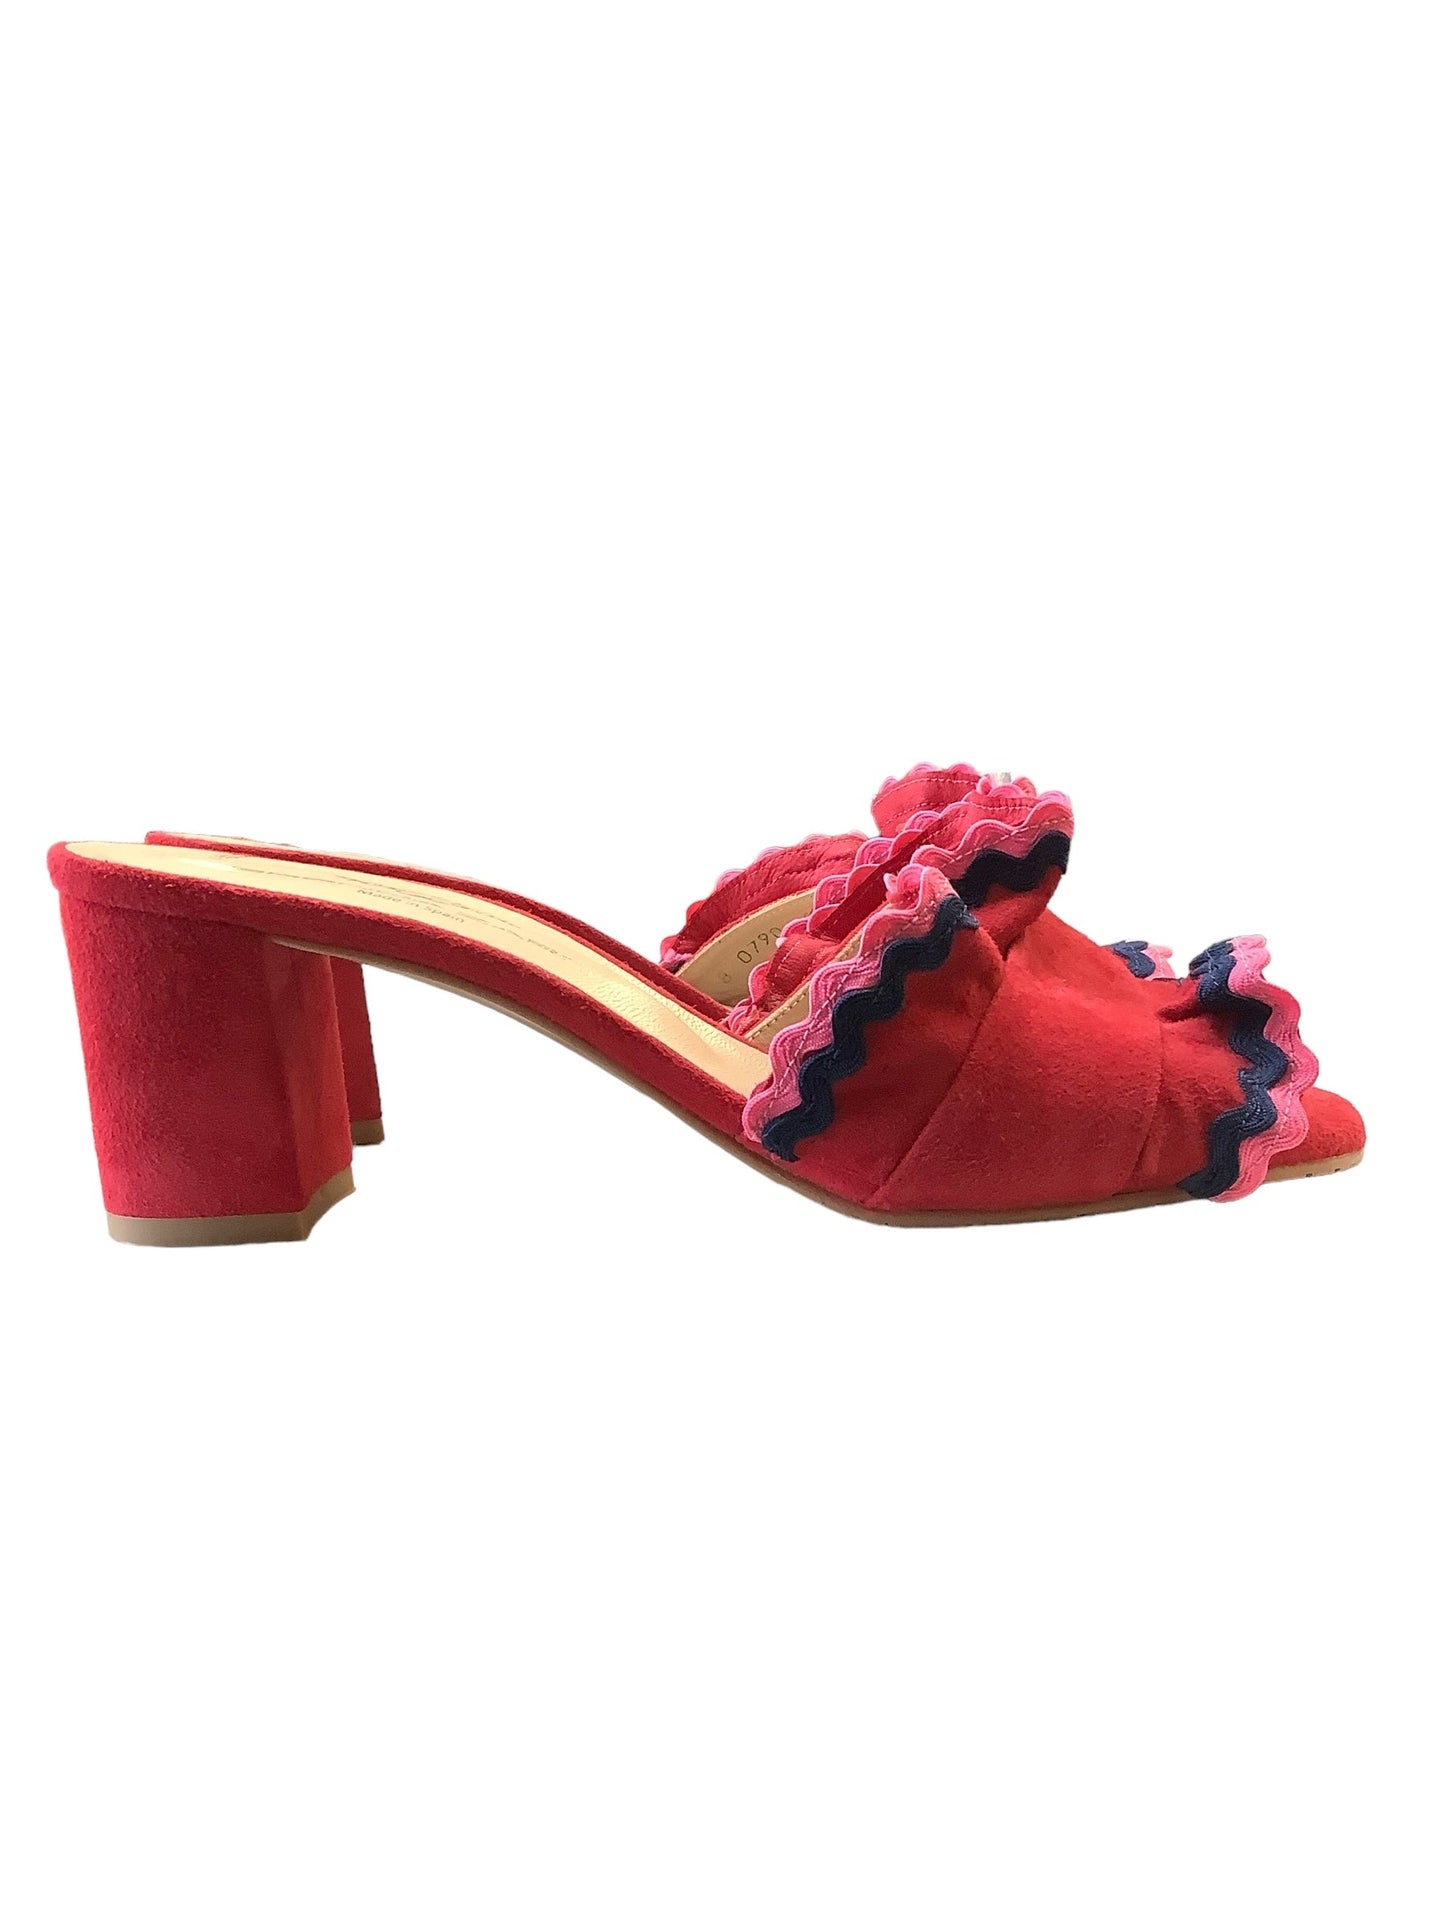 Red Sandals Heels Block Cma, Size 8